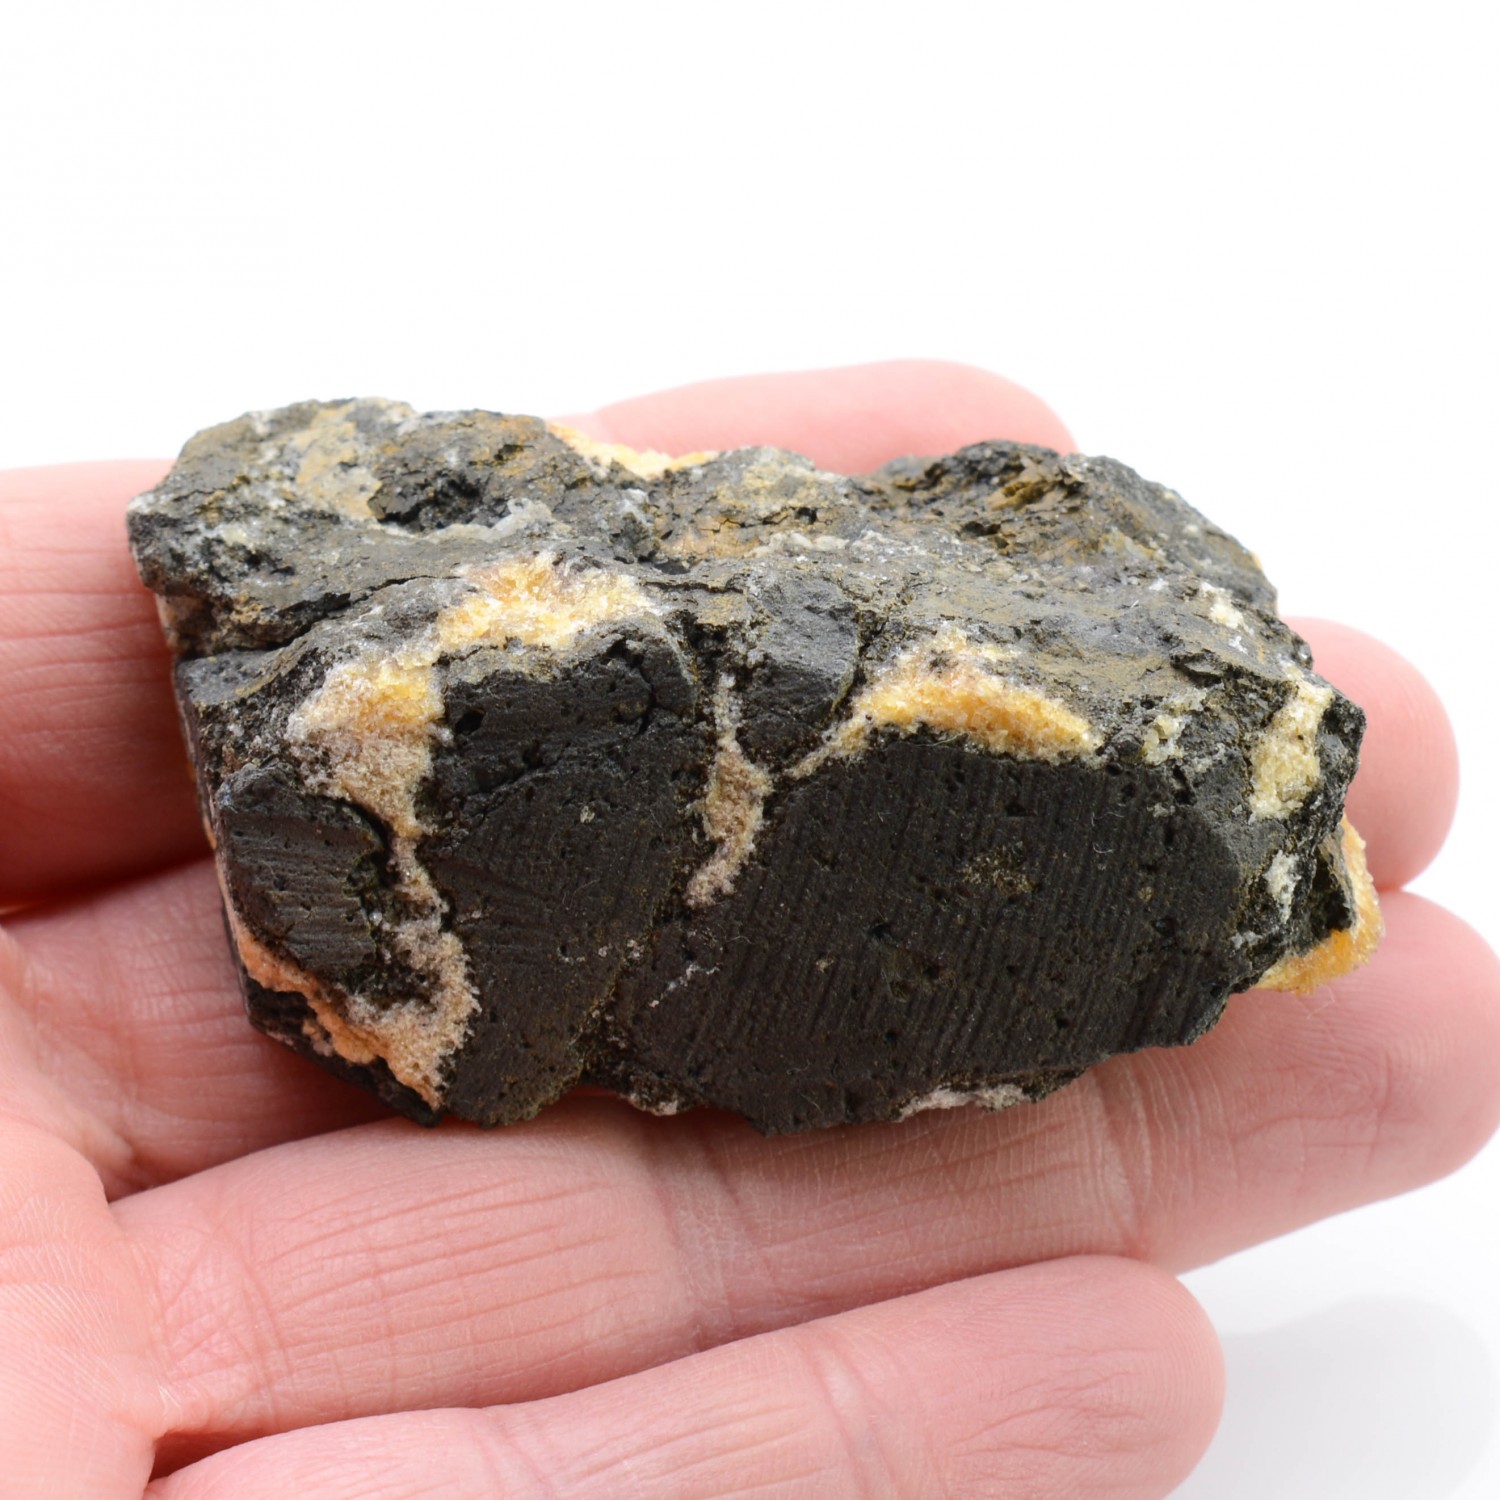 Calcite. minerals. Europe; England; Derby County; Egam Stock Photo - Alamy